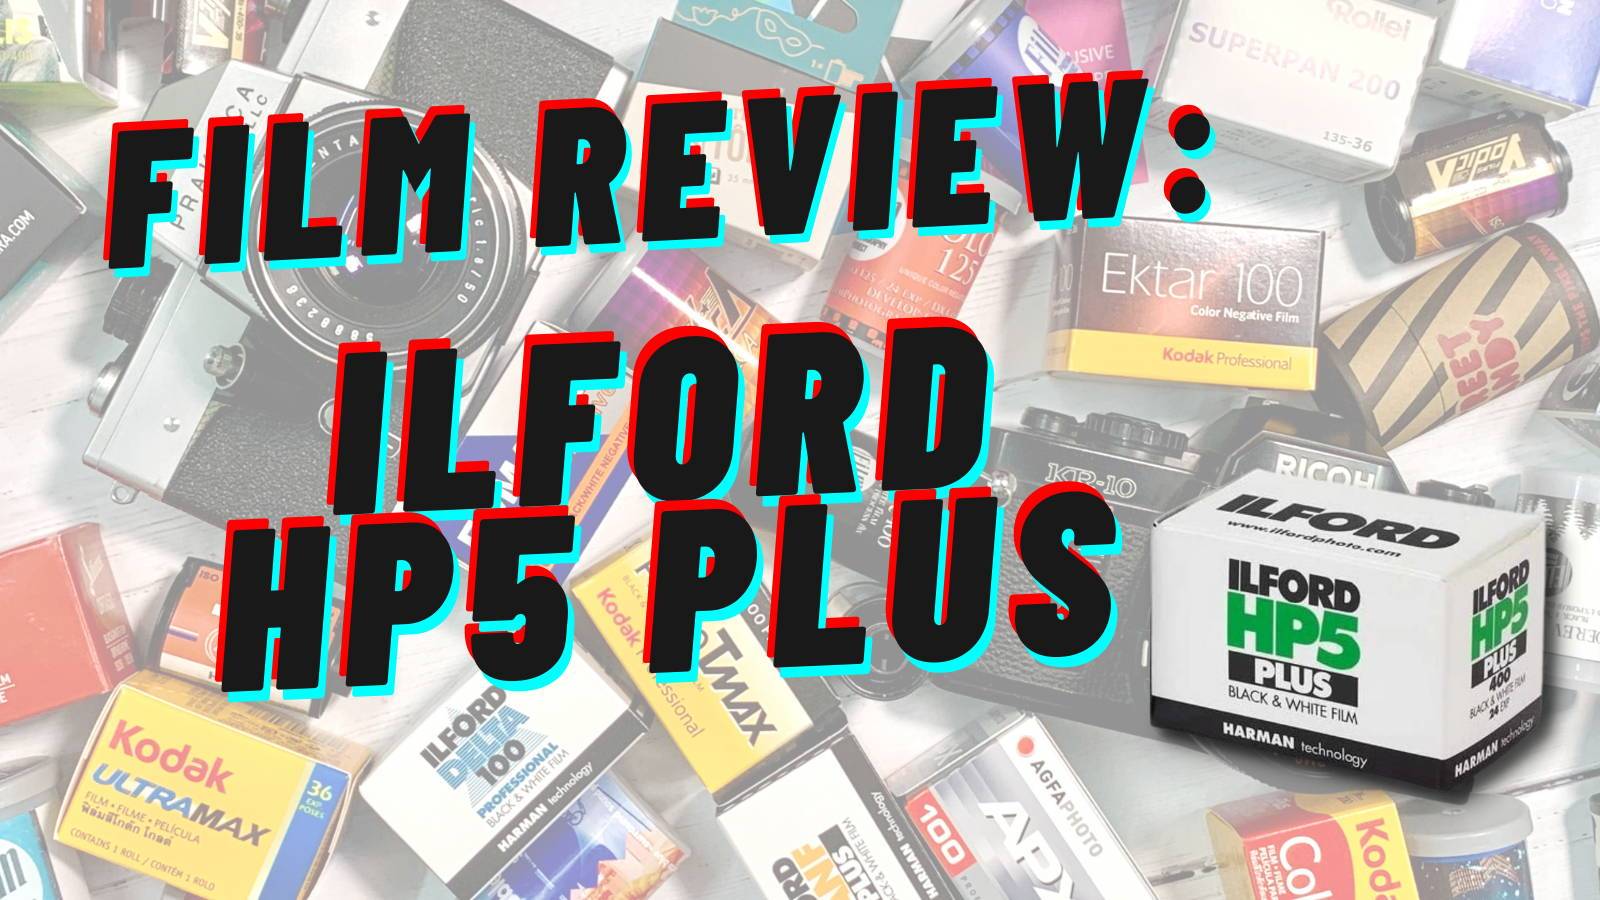 Ilford HP5 Plus Film Review - Analogue Wonderland